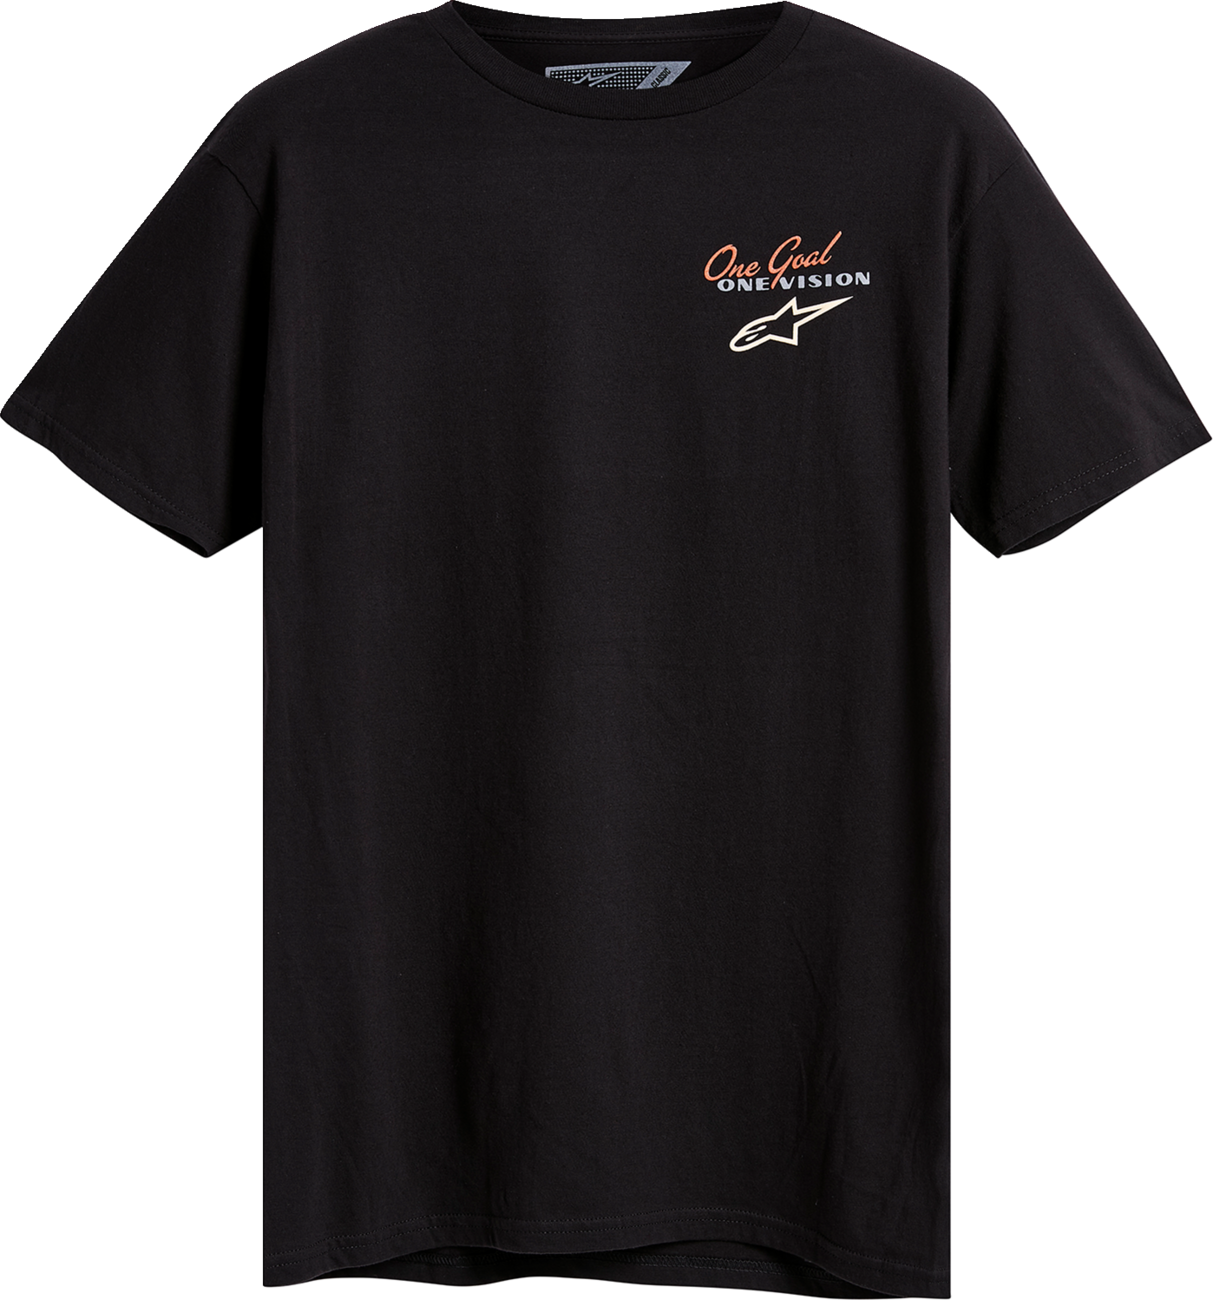 ALPINESTARS Flagged T-Shirt - Black - Large 12337215010L